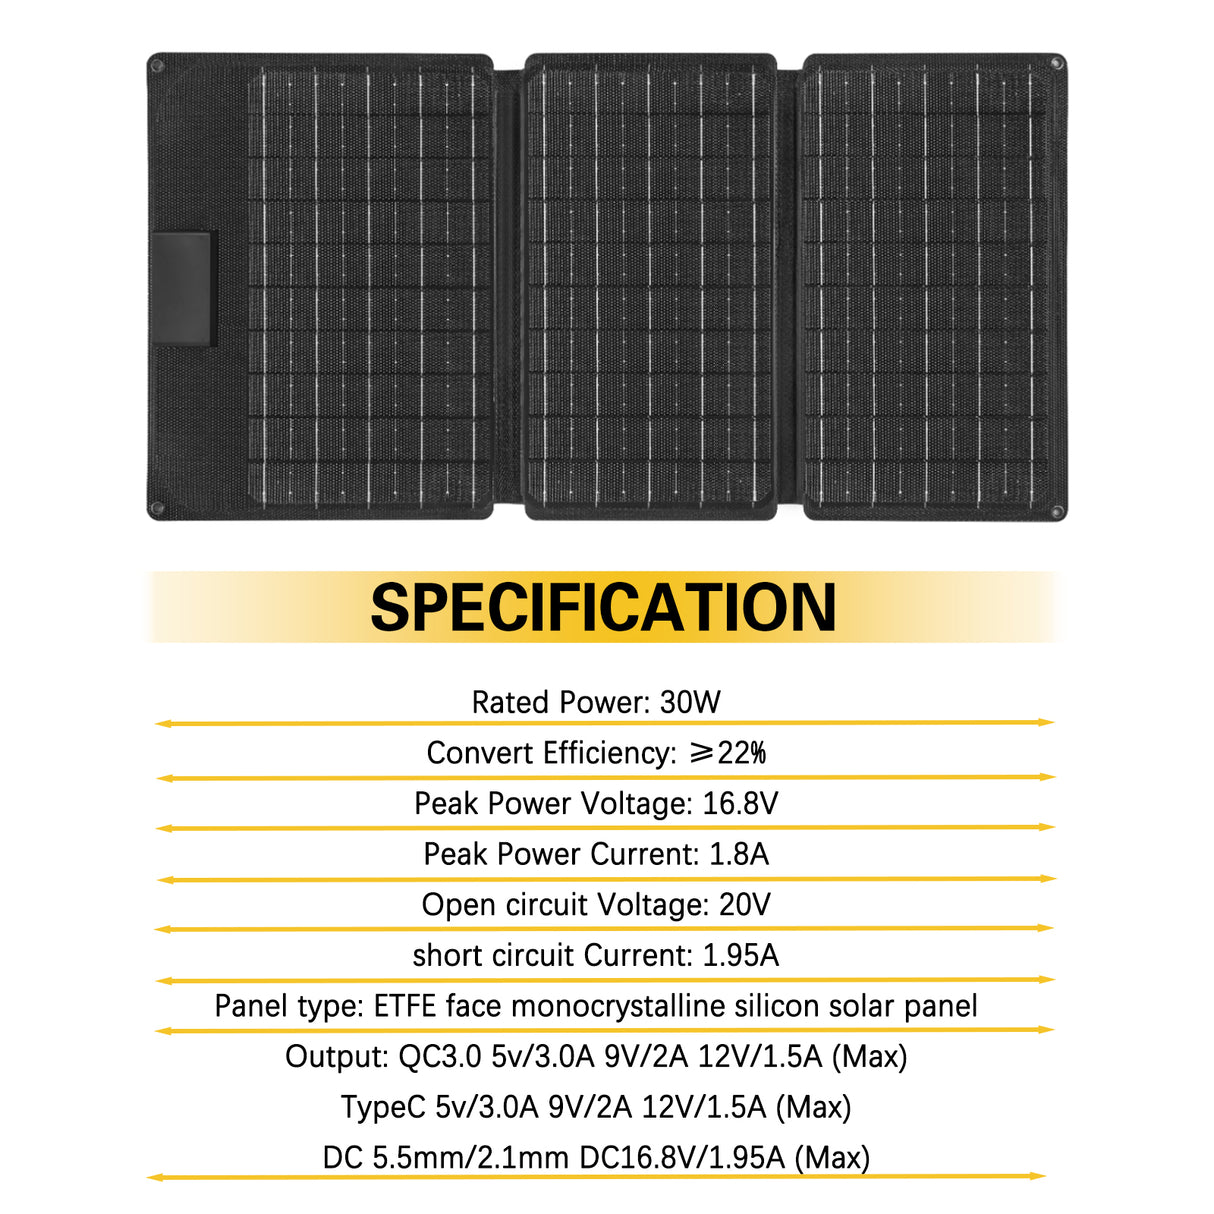 ROCKSOLAR 30W 12V Foldable Solar Panel - Portable USB Solar Battery Charger